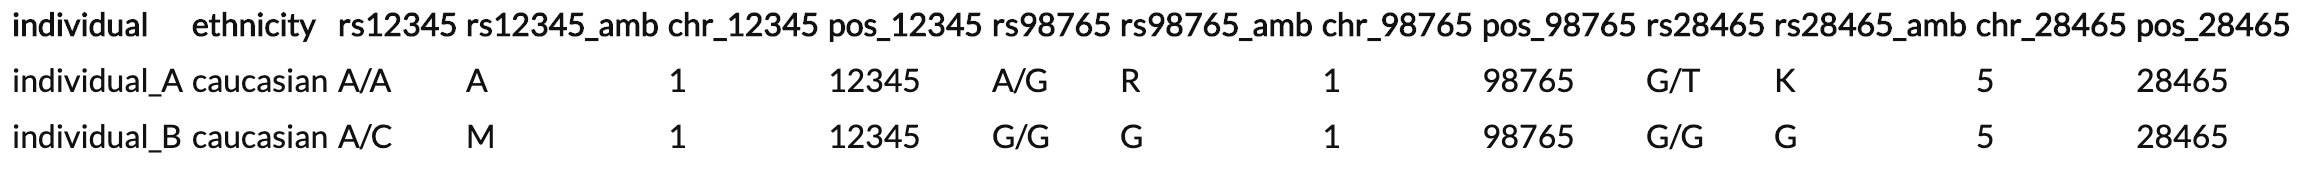 genotype table